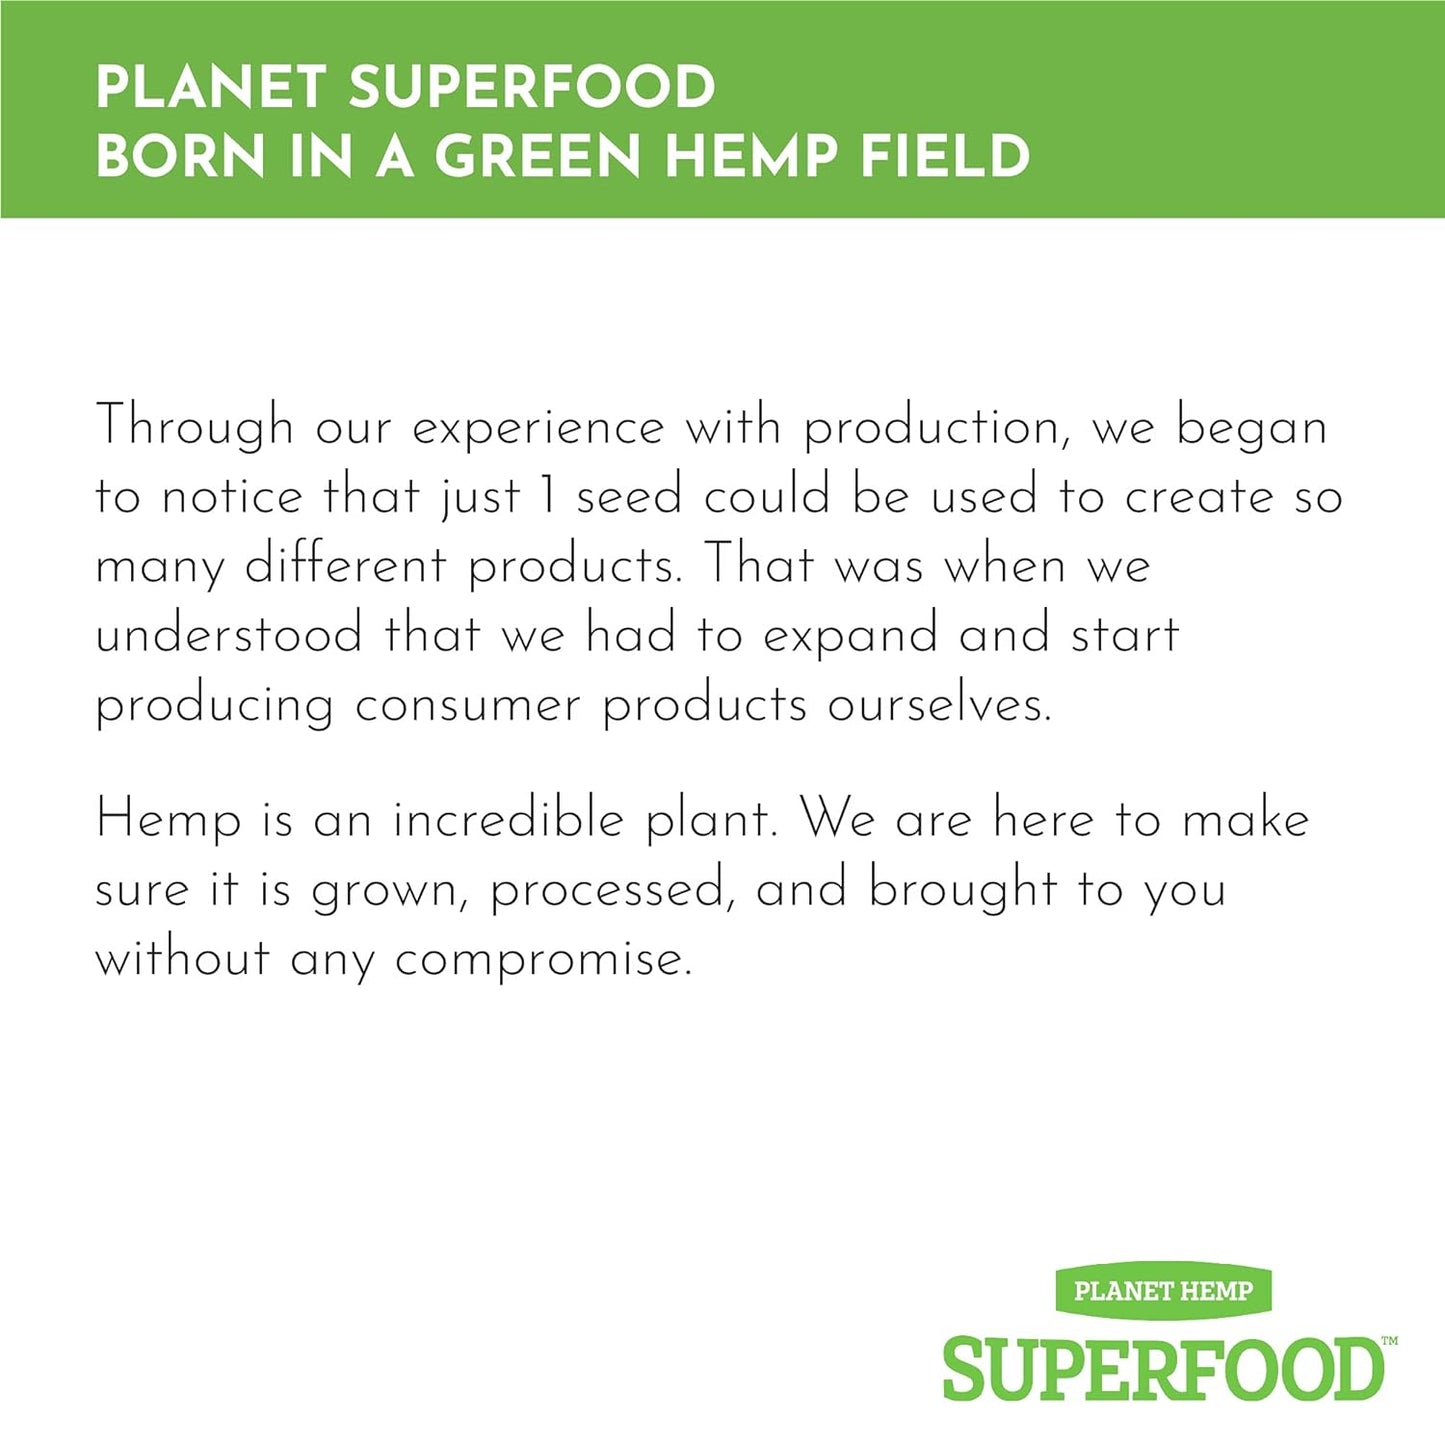 - Superseeds Blend - Dark Chocolate & Superberries - Plant Based - Vegan - 6.2 Ounce